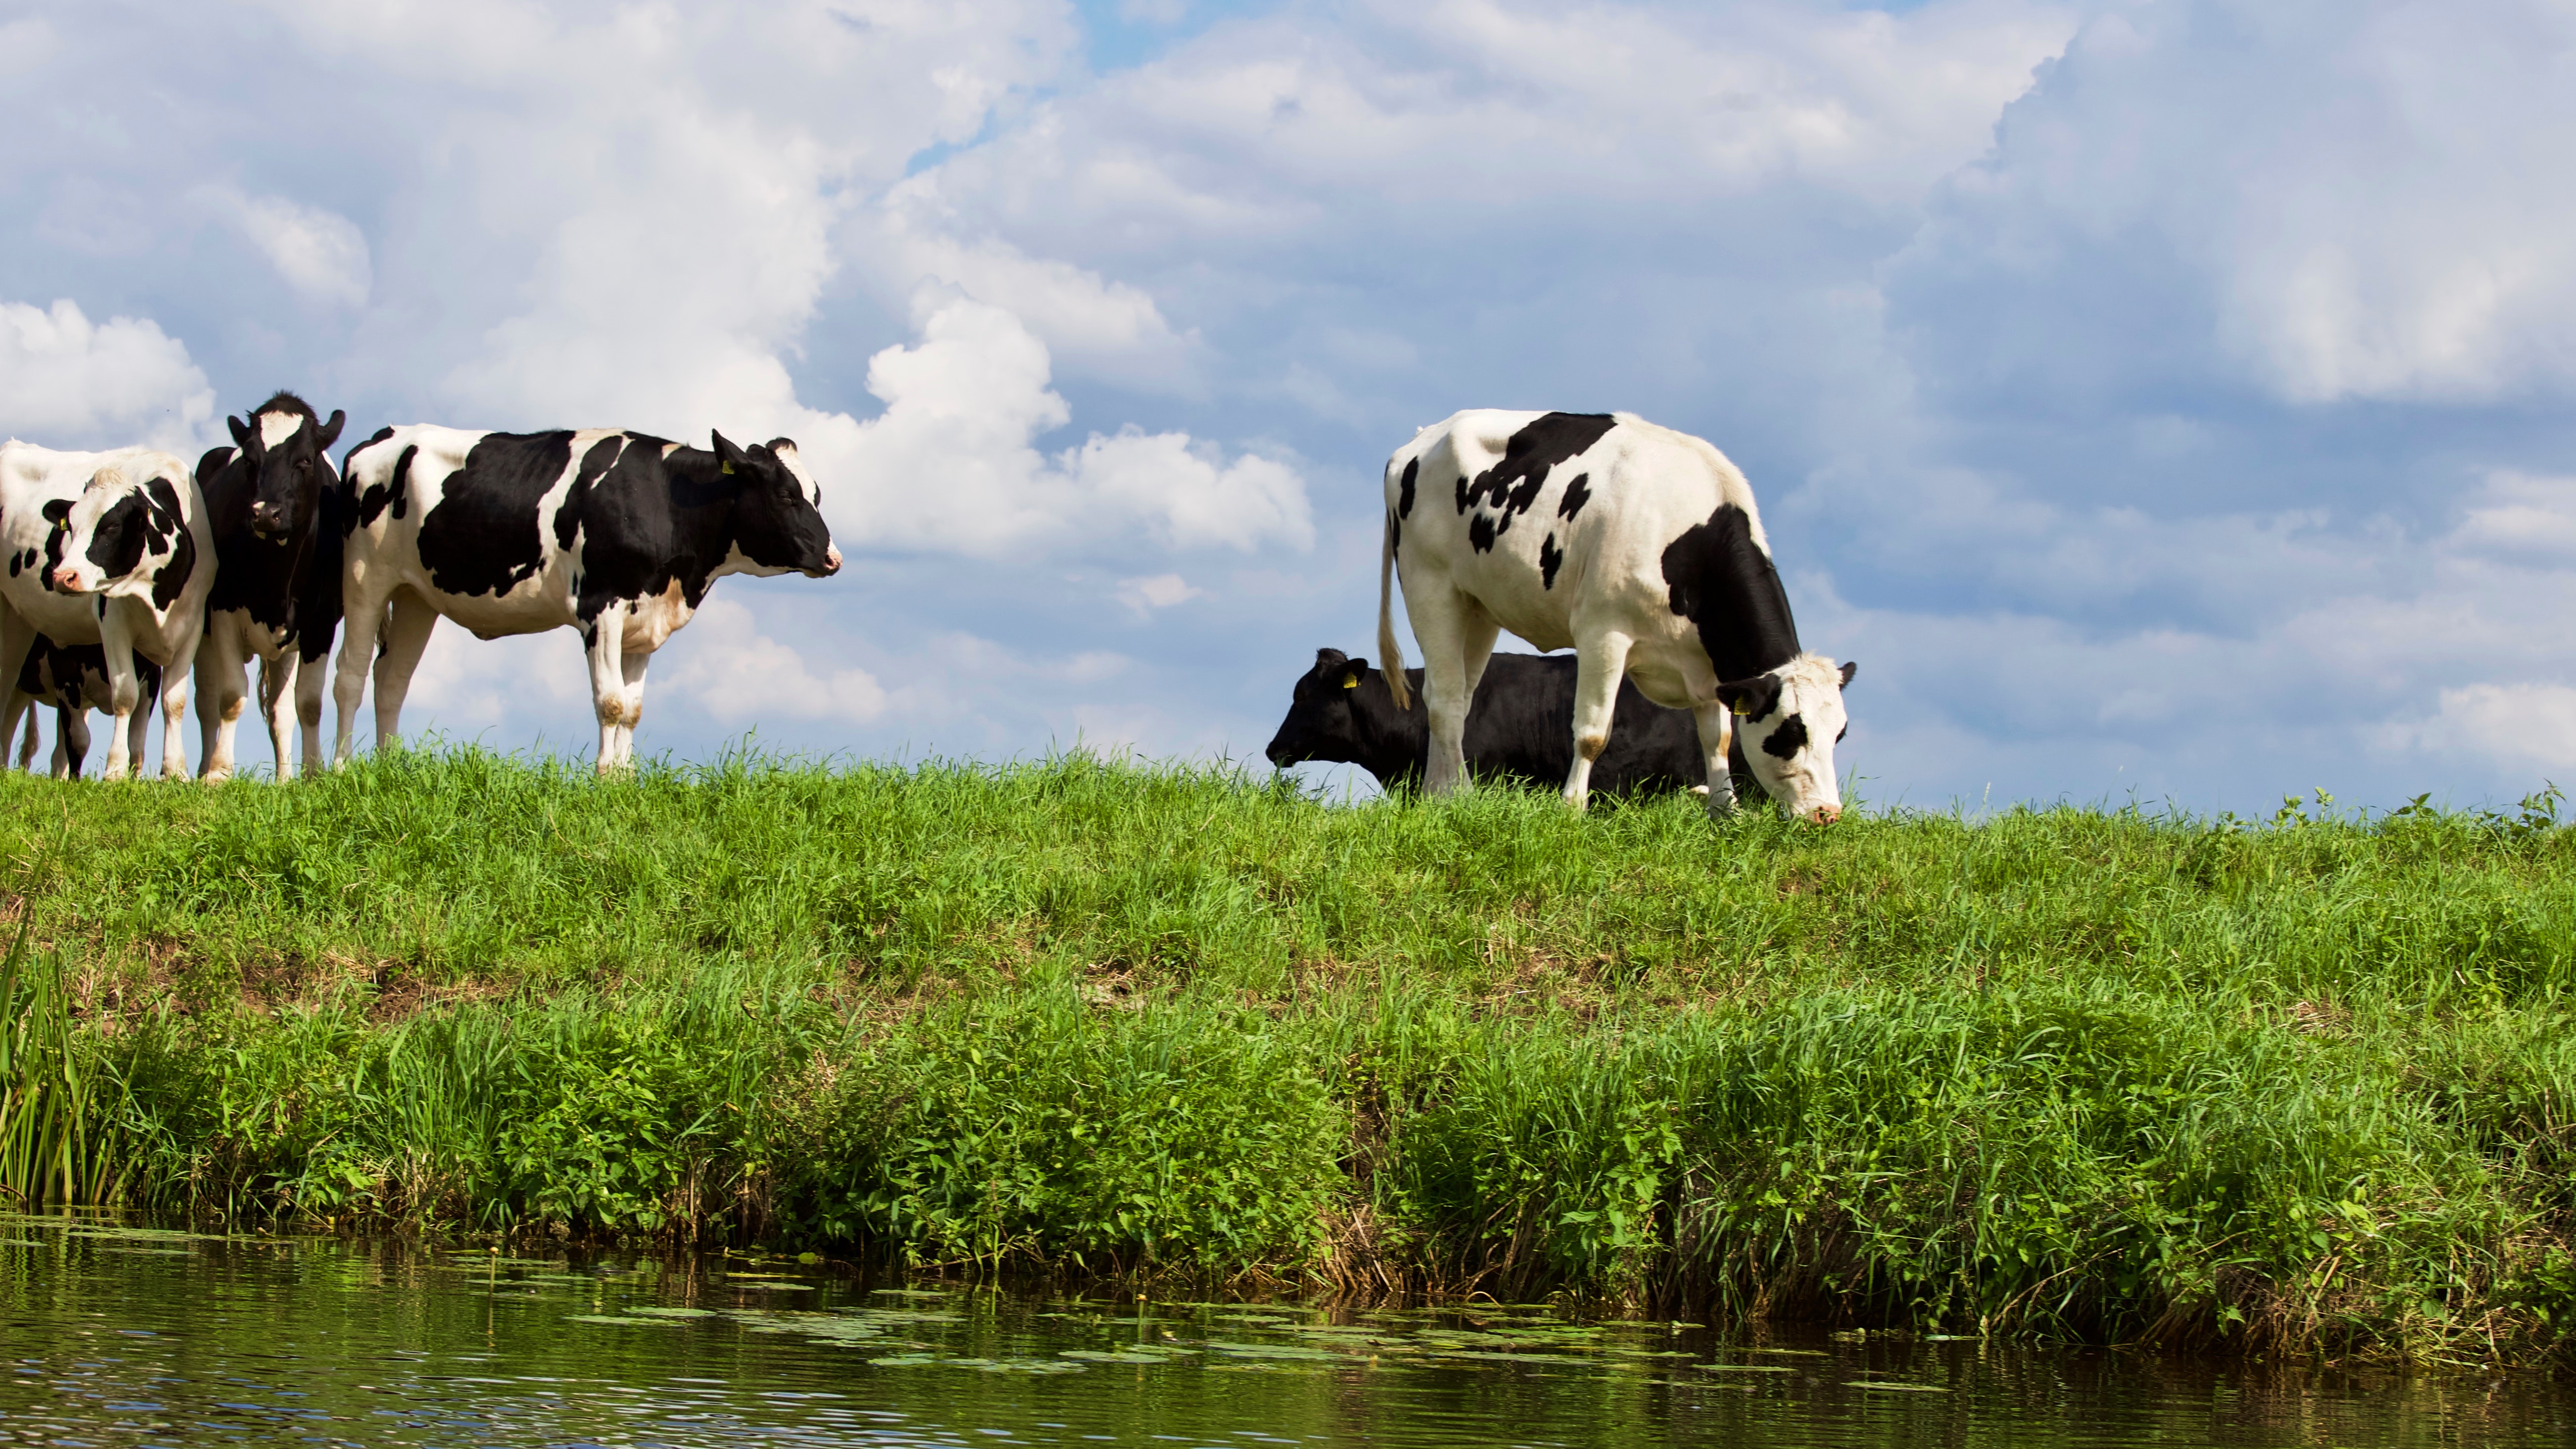 Cows on Farm Against Sky · Free Stock Photo